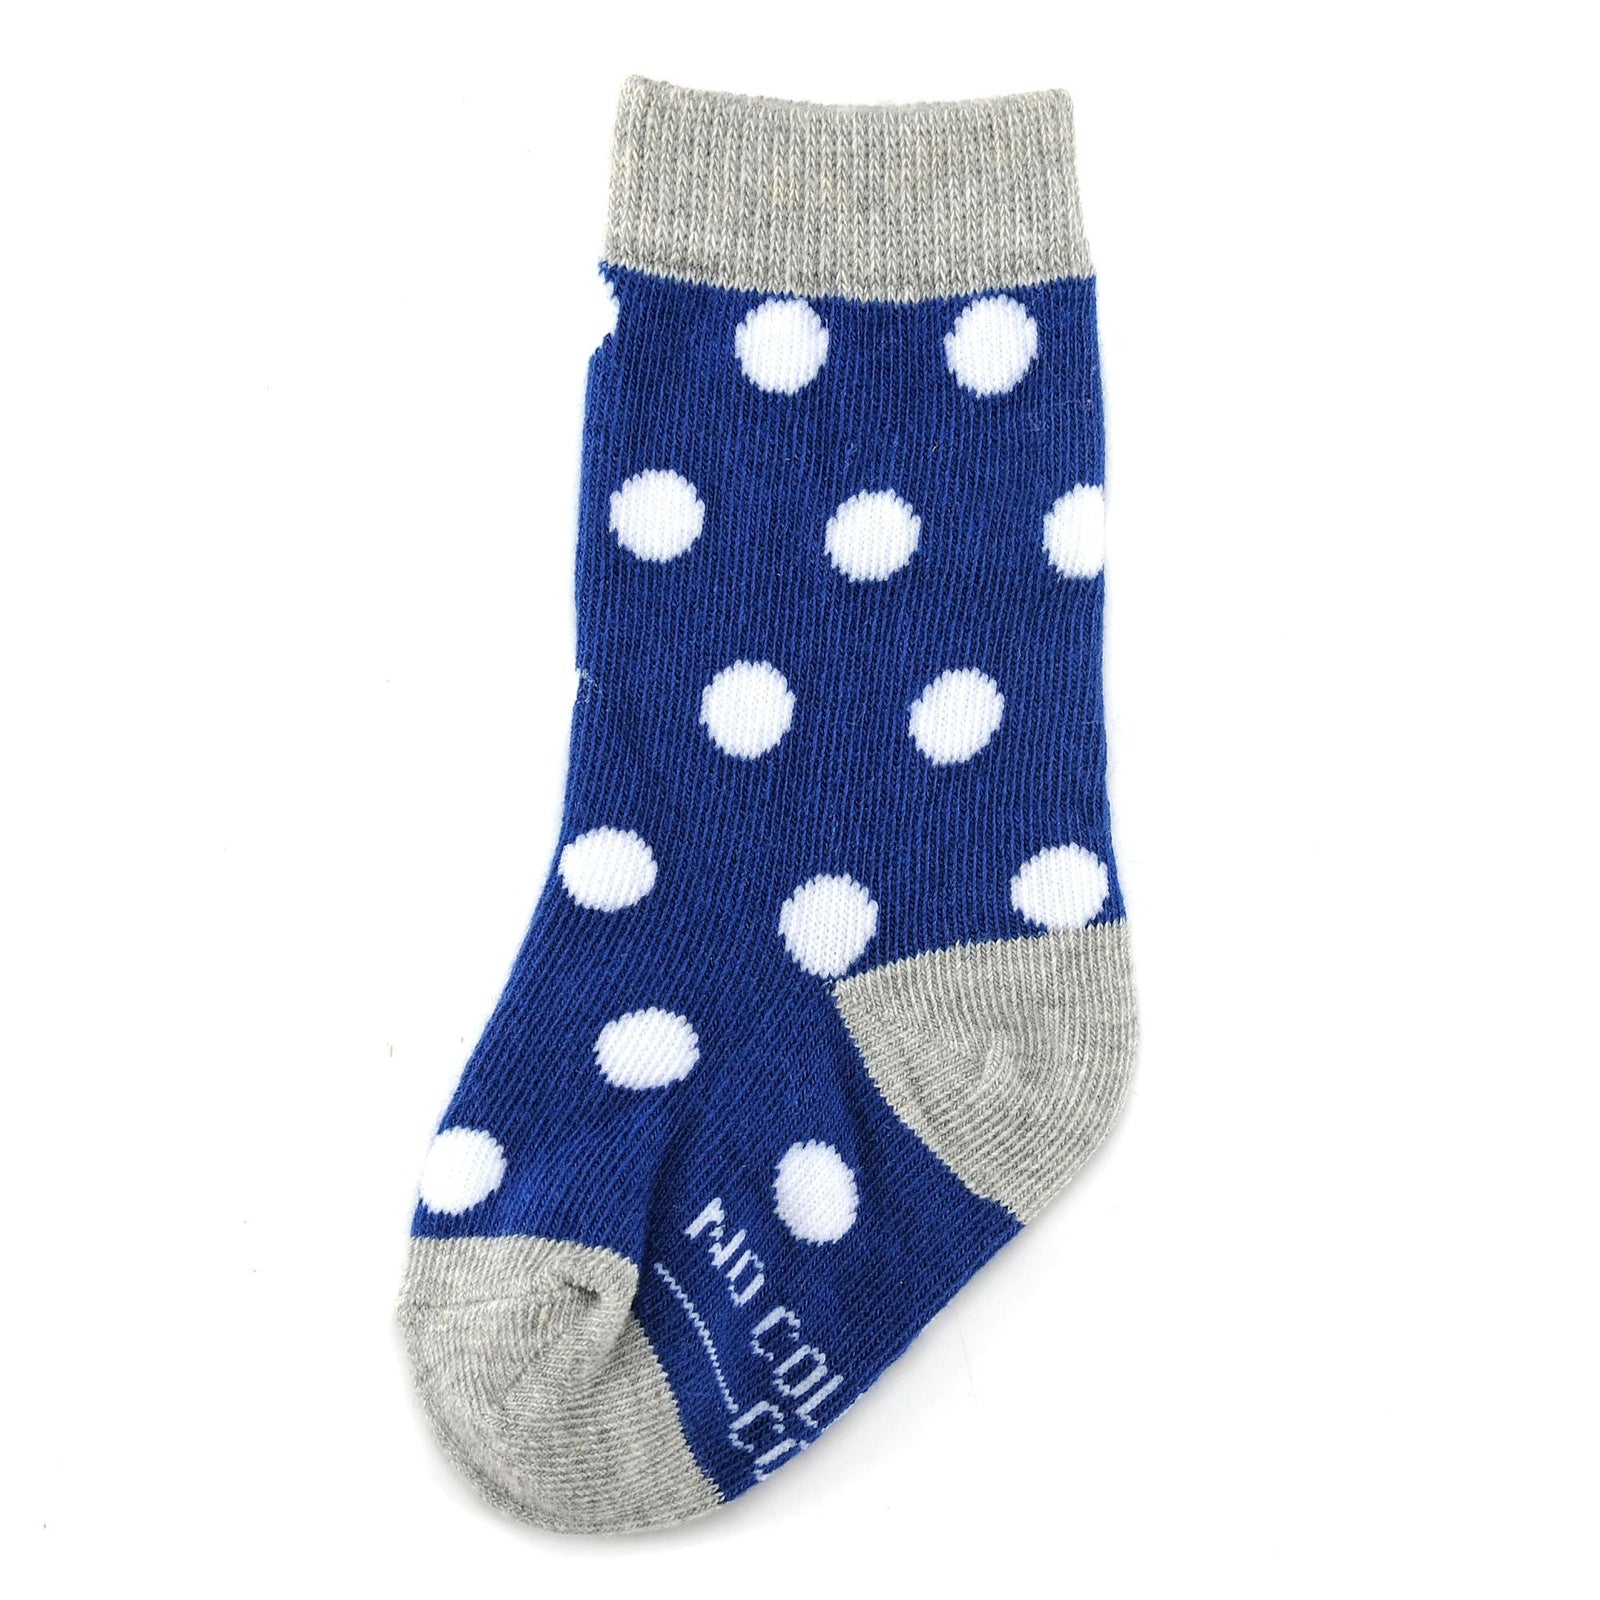 All Socks - No Cold Feet